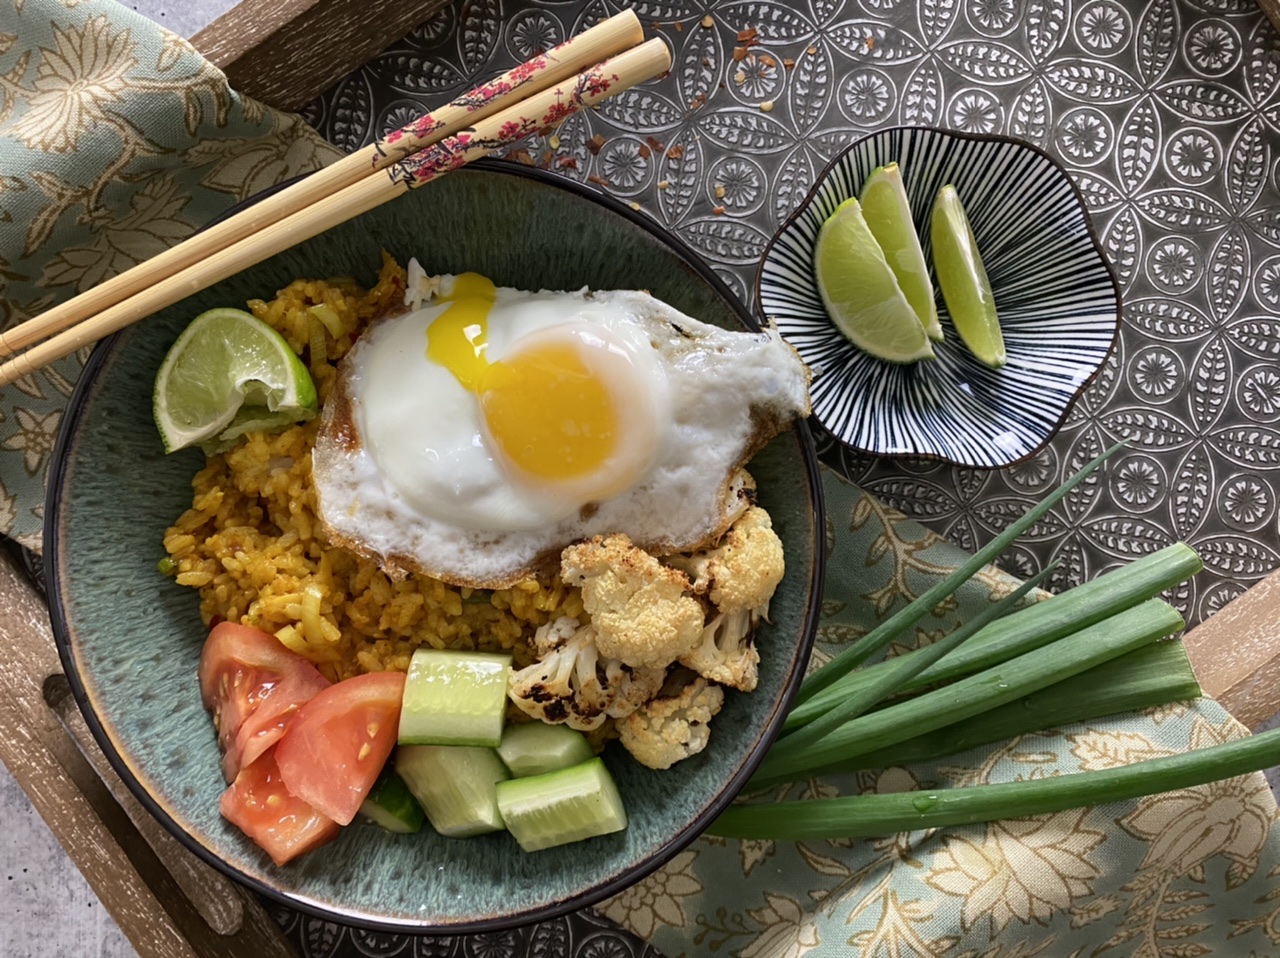 814D5281 4DDF 469D BEB1 06764DBAE070 - Nasi Goreng - Vegetarian Indonesian Fried Rice with Roasted Cauliflower